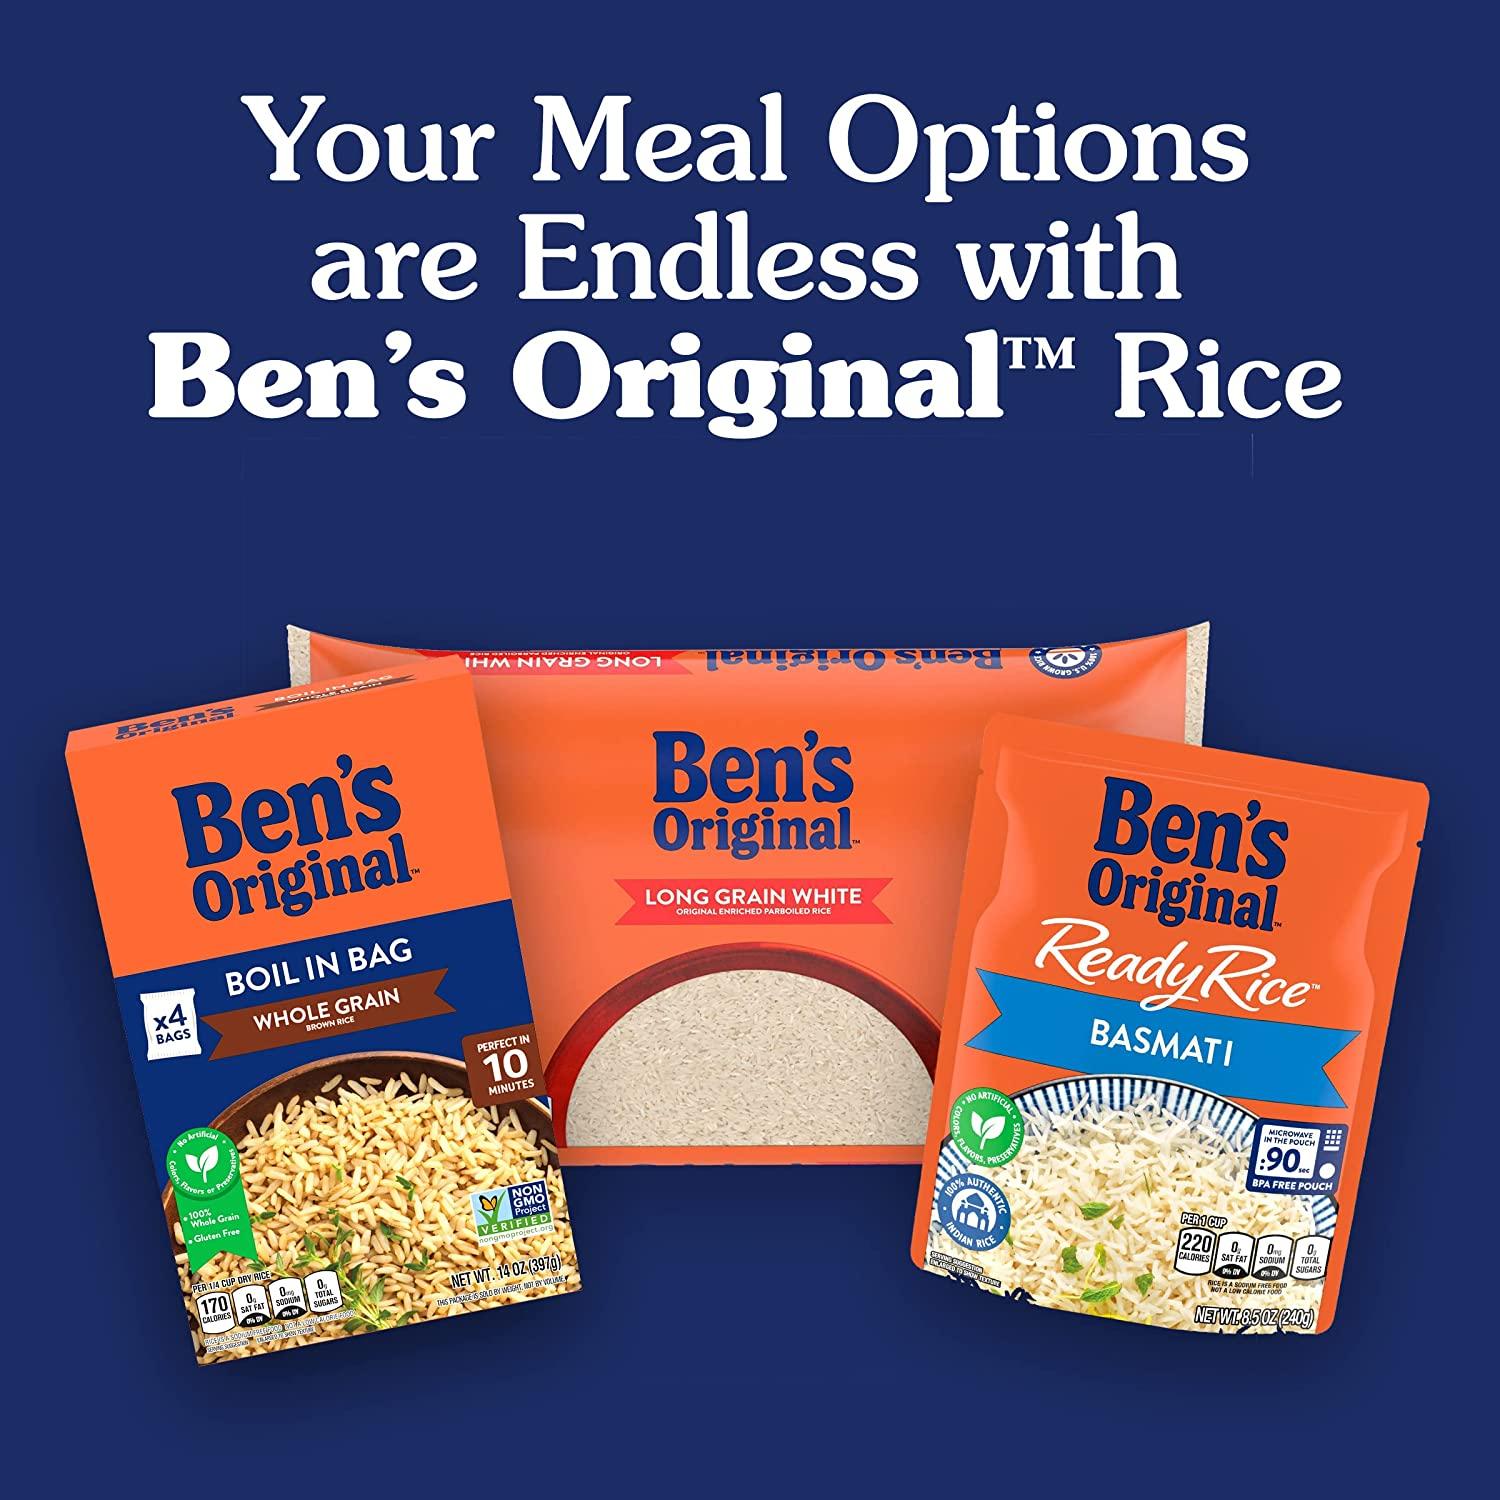 Ben's Original Ready Rice Jasmine Family Size Rice, Easy Dinner